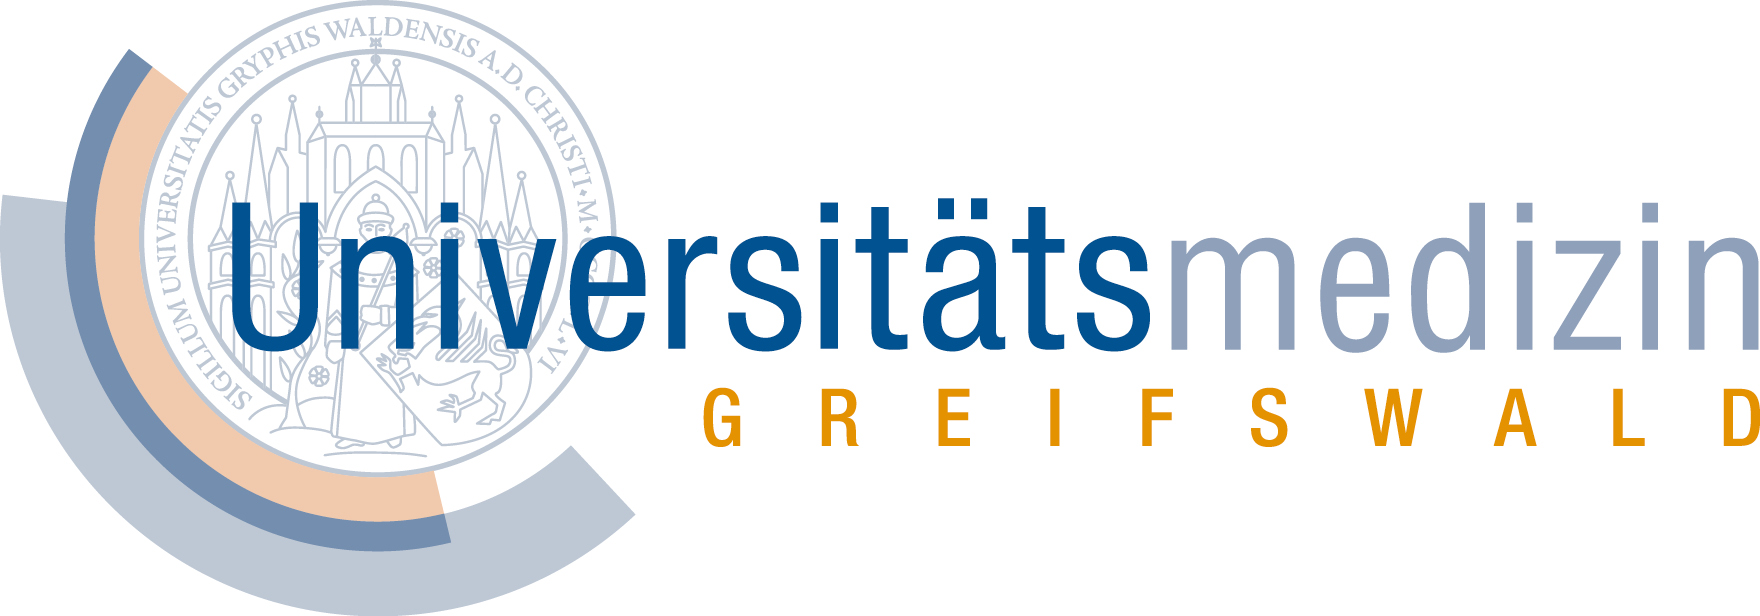 Universitätsmedizin Greifswald Logo